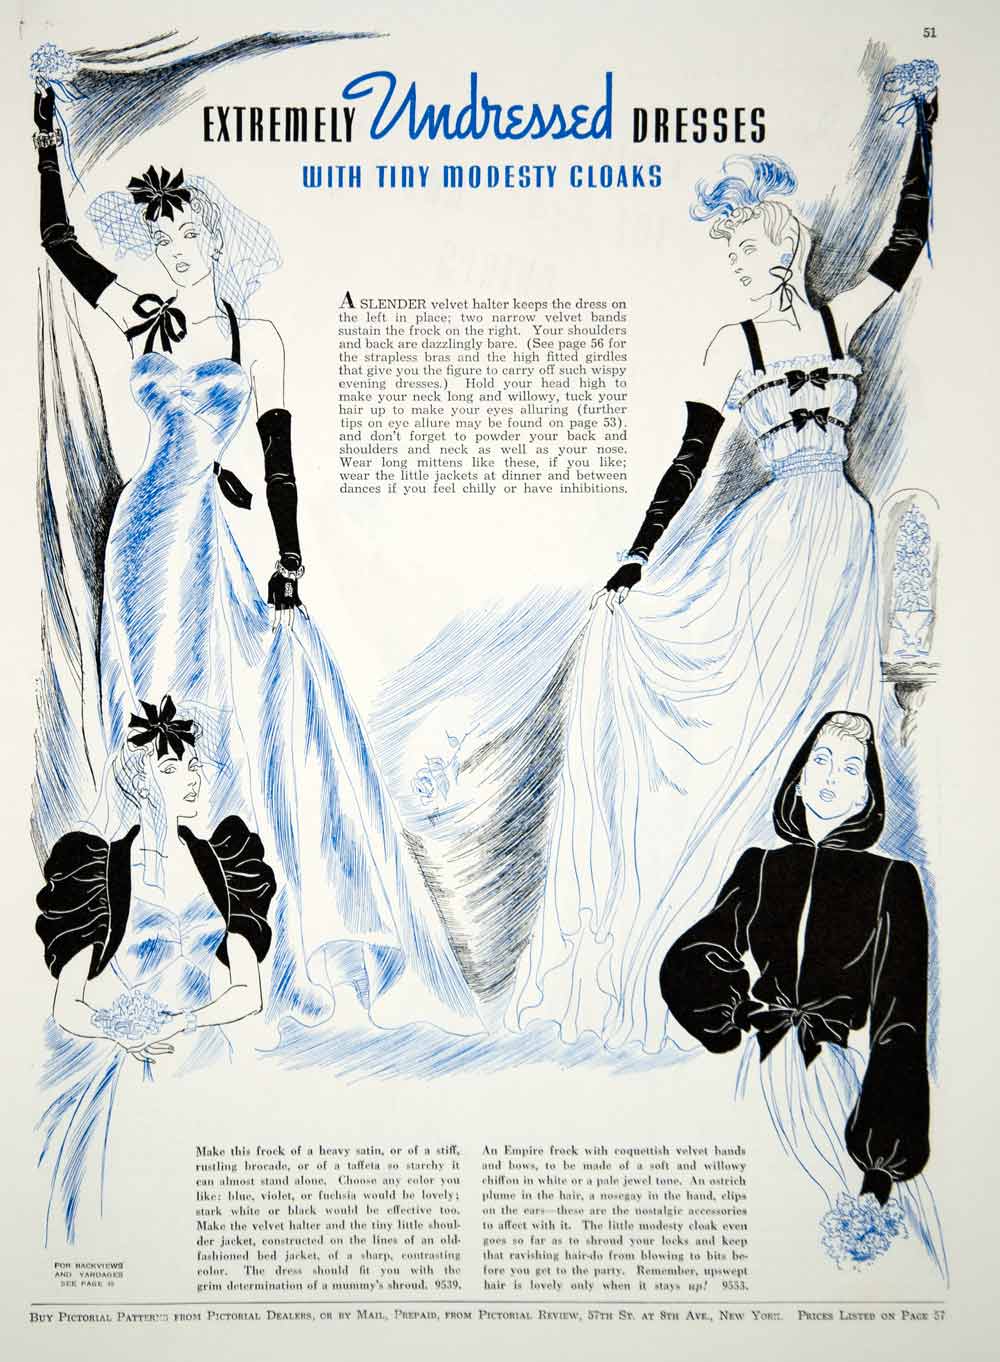 Wedding Bridal Bridesmaids Gown Dress Shrug McCalls Sewing Pattern 4450 |  eBay